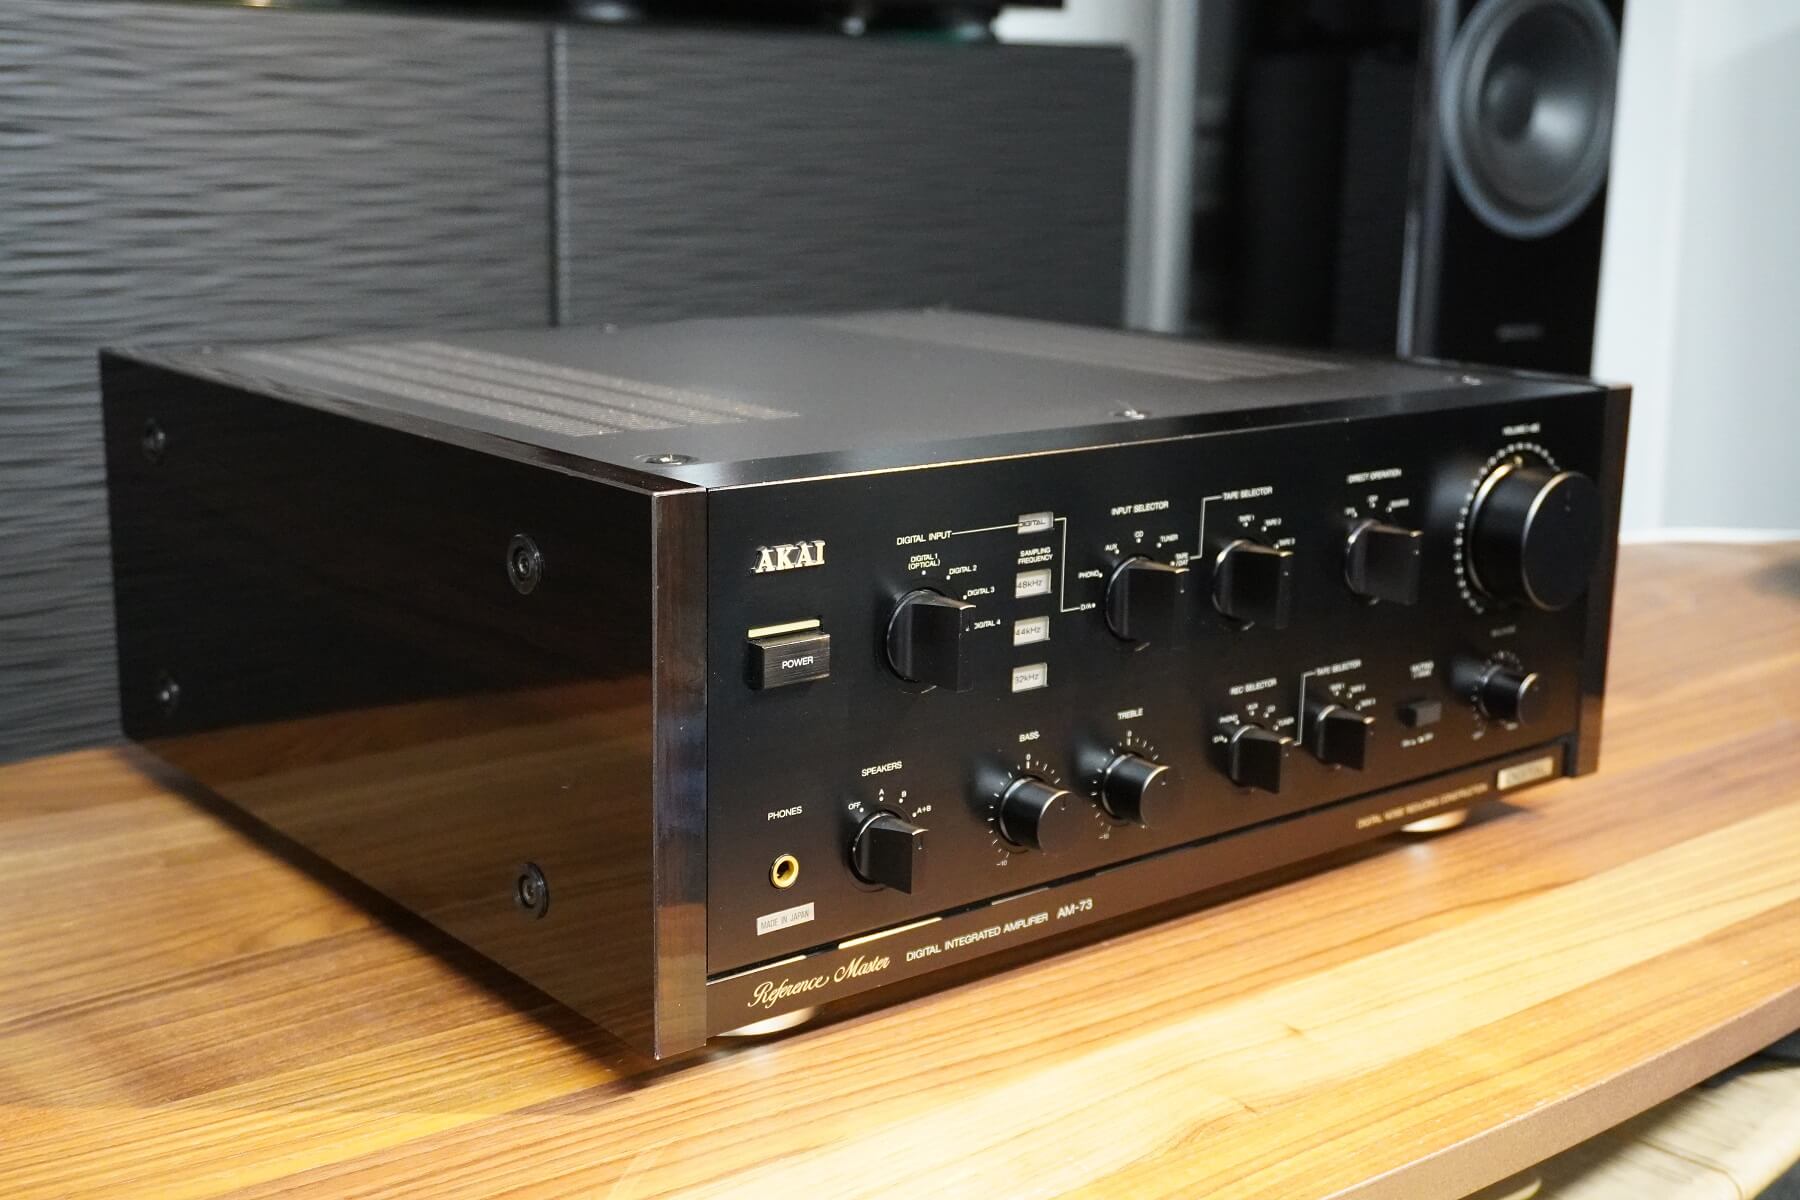 Akai AM-73 Digital Integrated Amplifier - Side